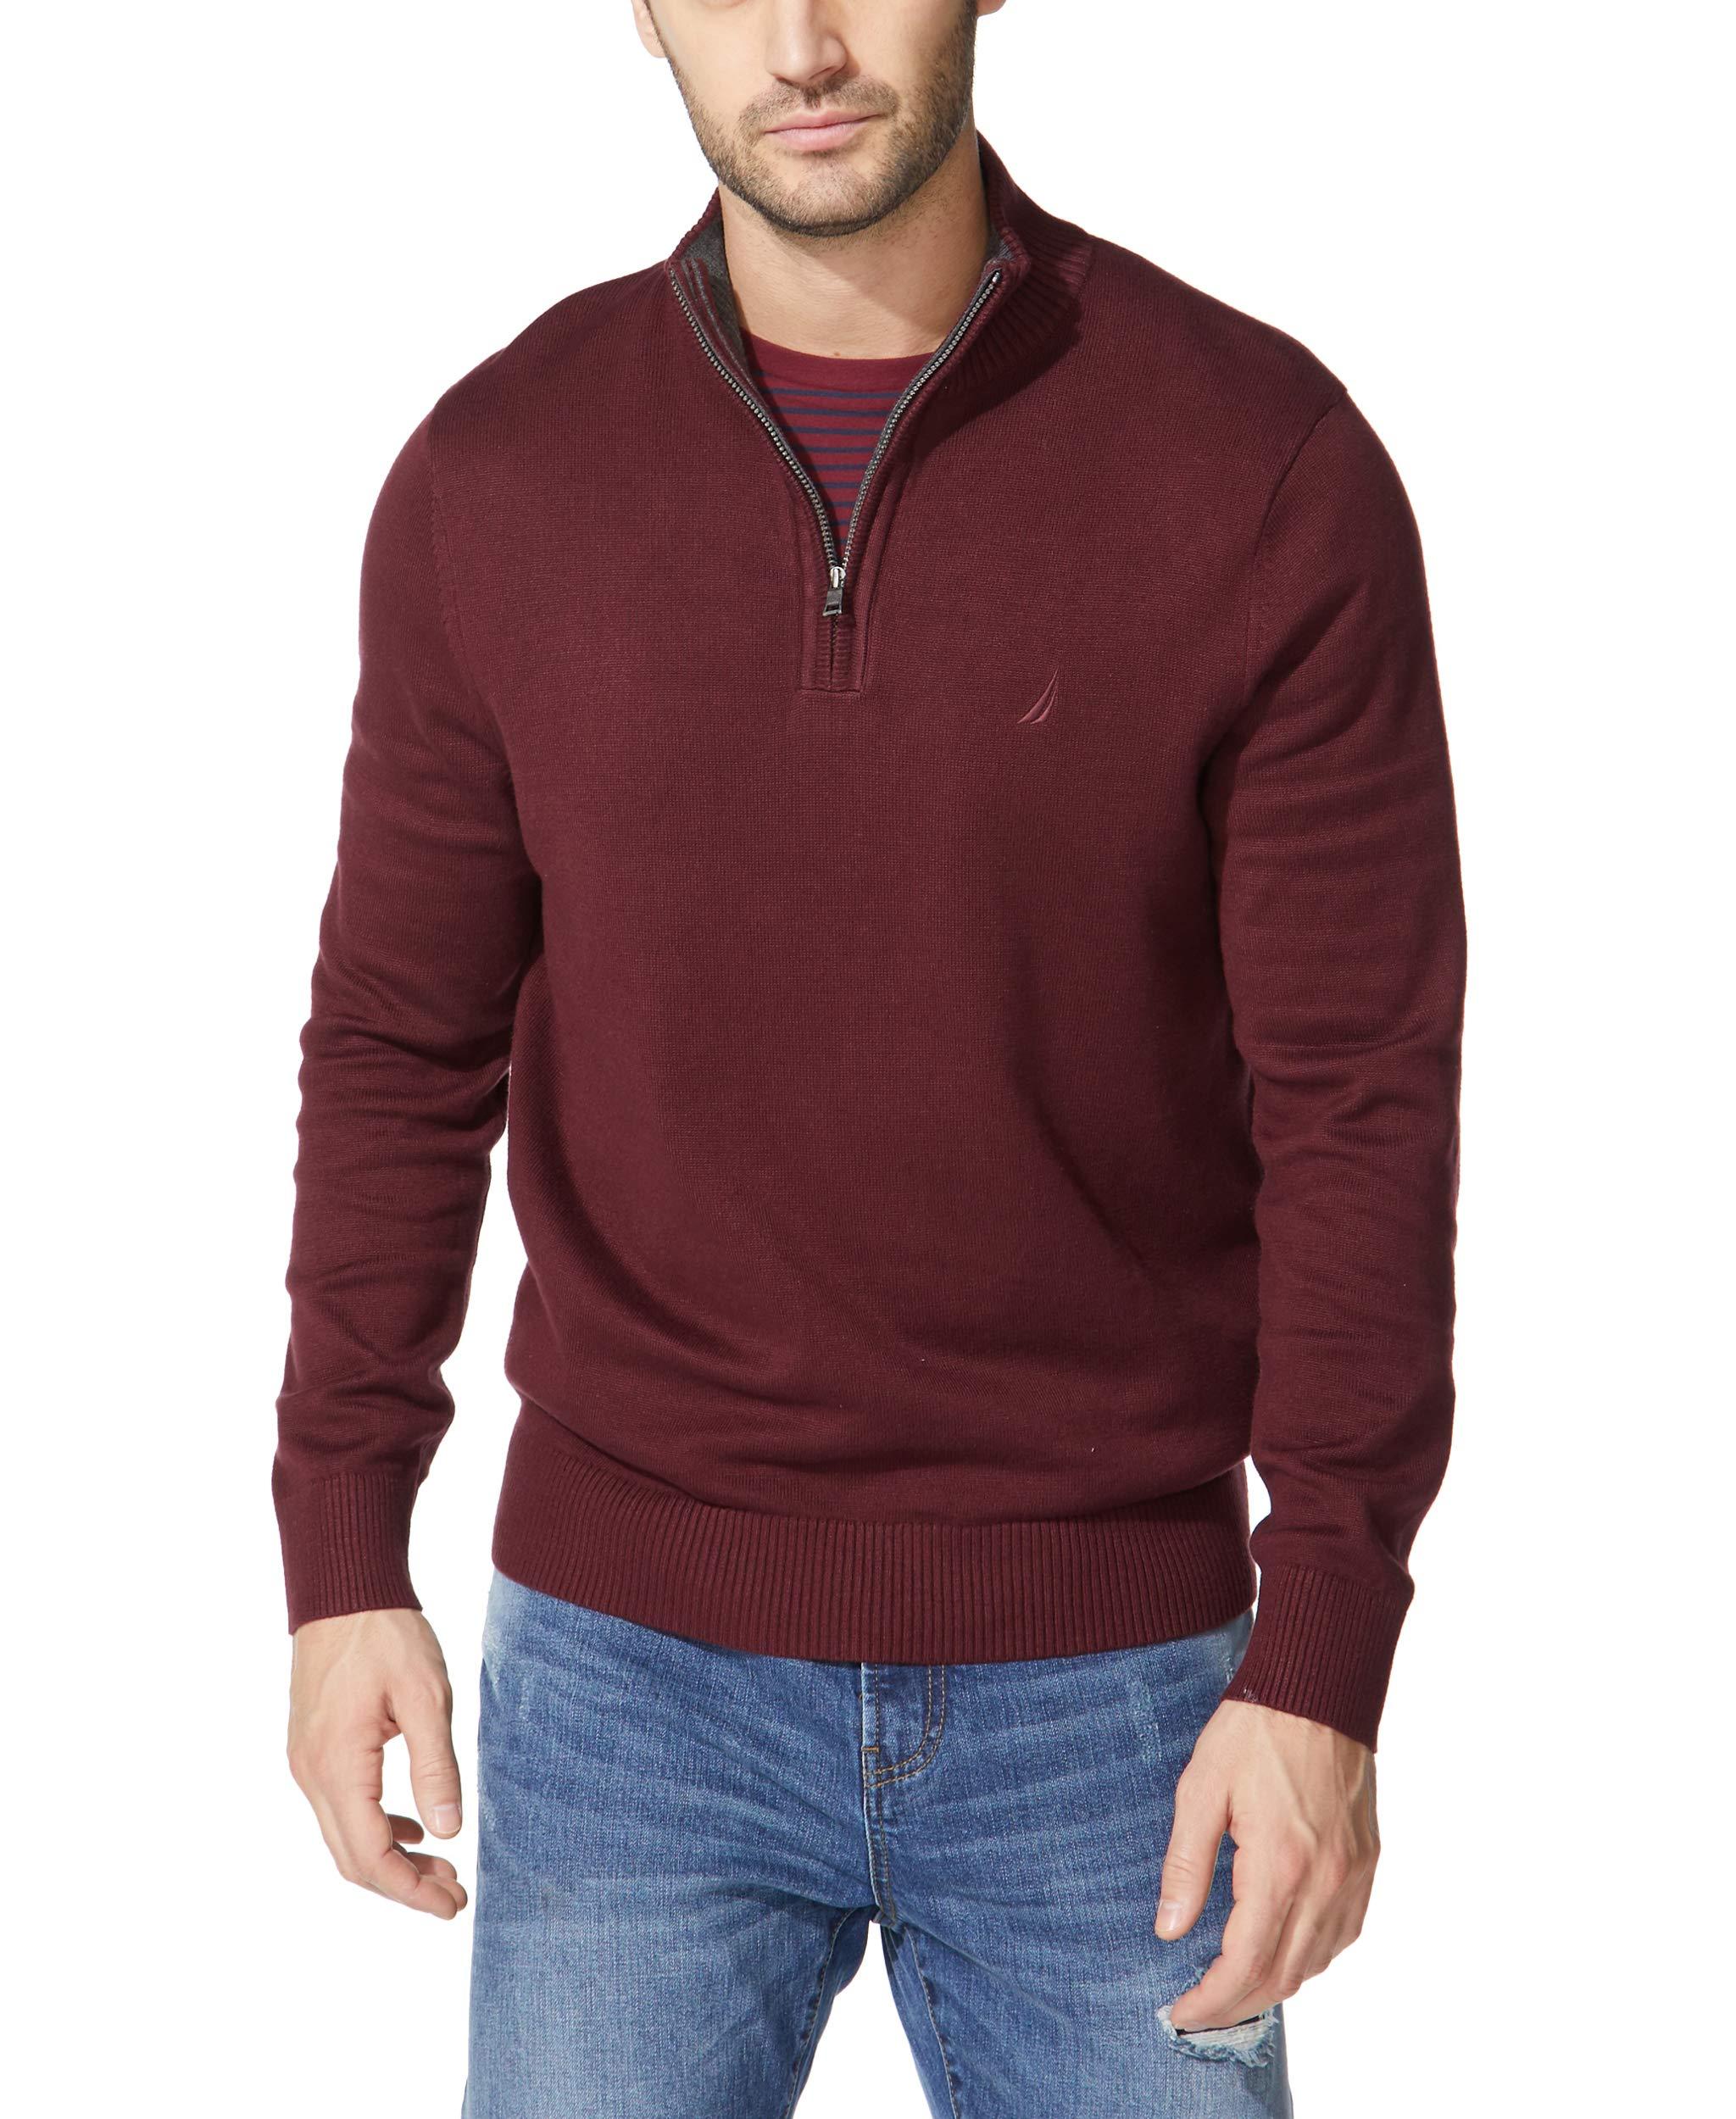 Nautica Quarter-zip Sweater in Red for Men - Lyst